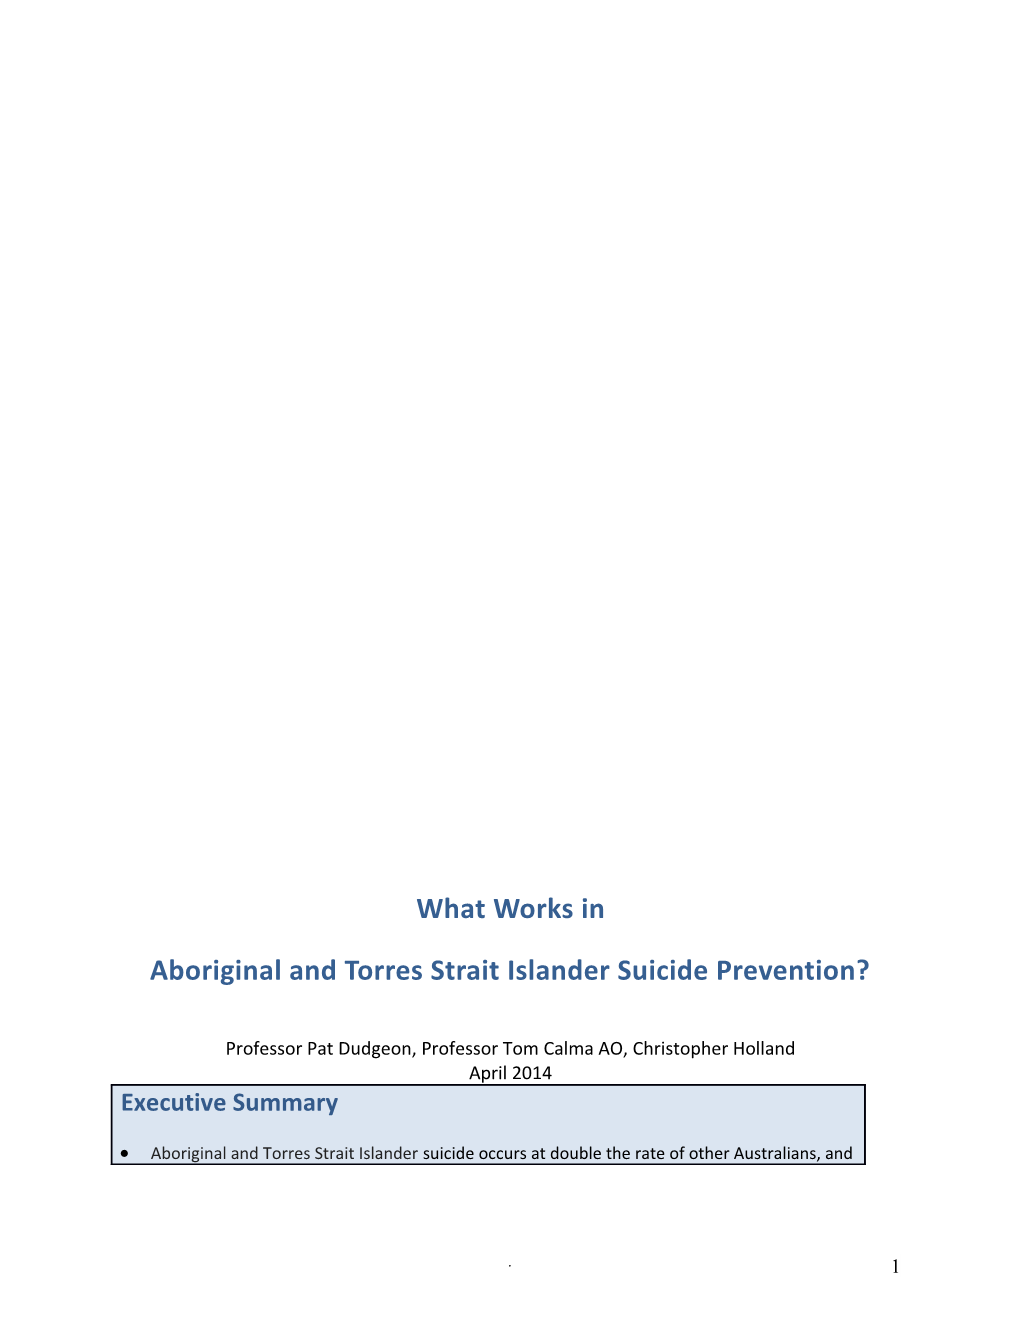 Aboriginal and Torres Strait Islandersuicide Prevention?